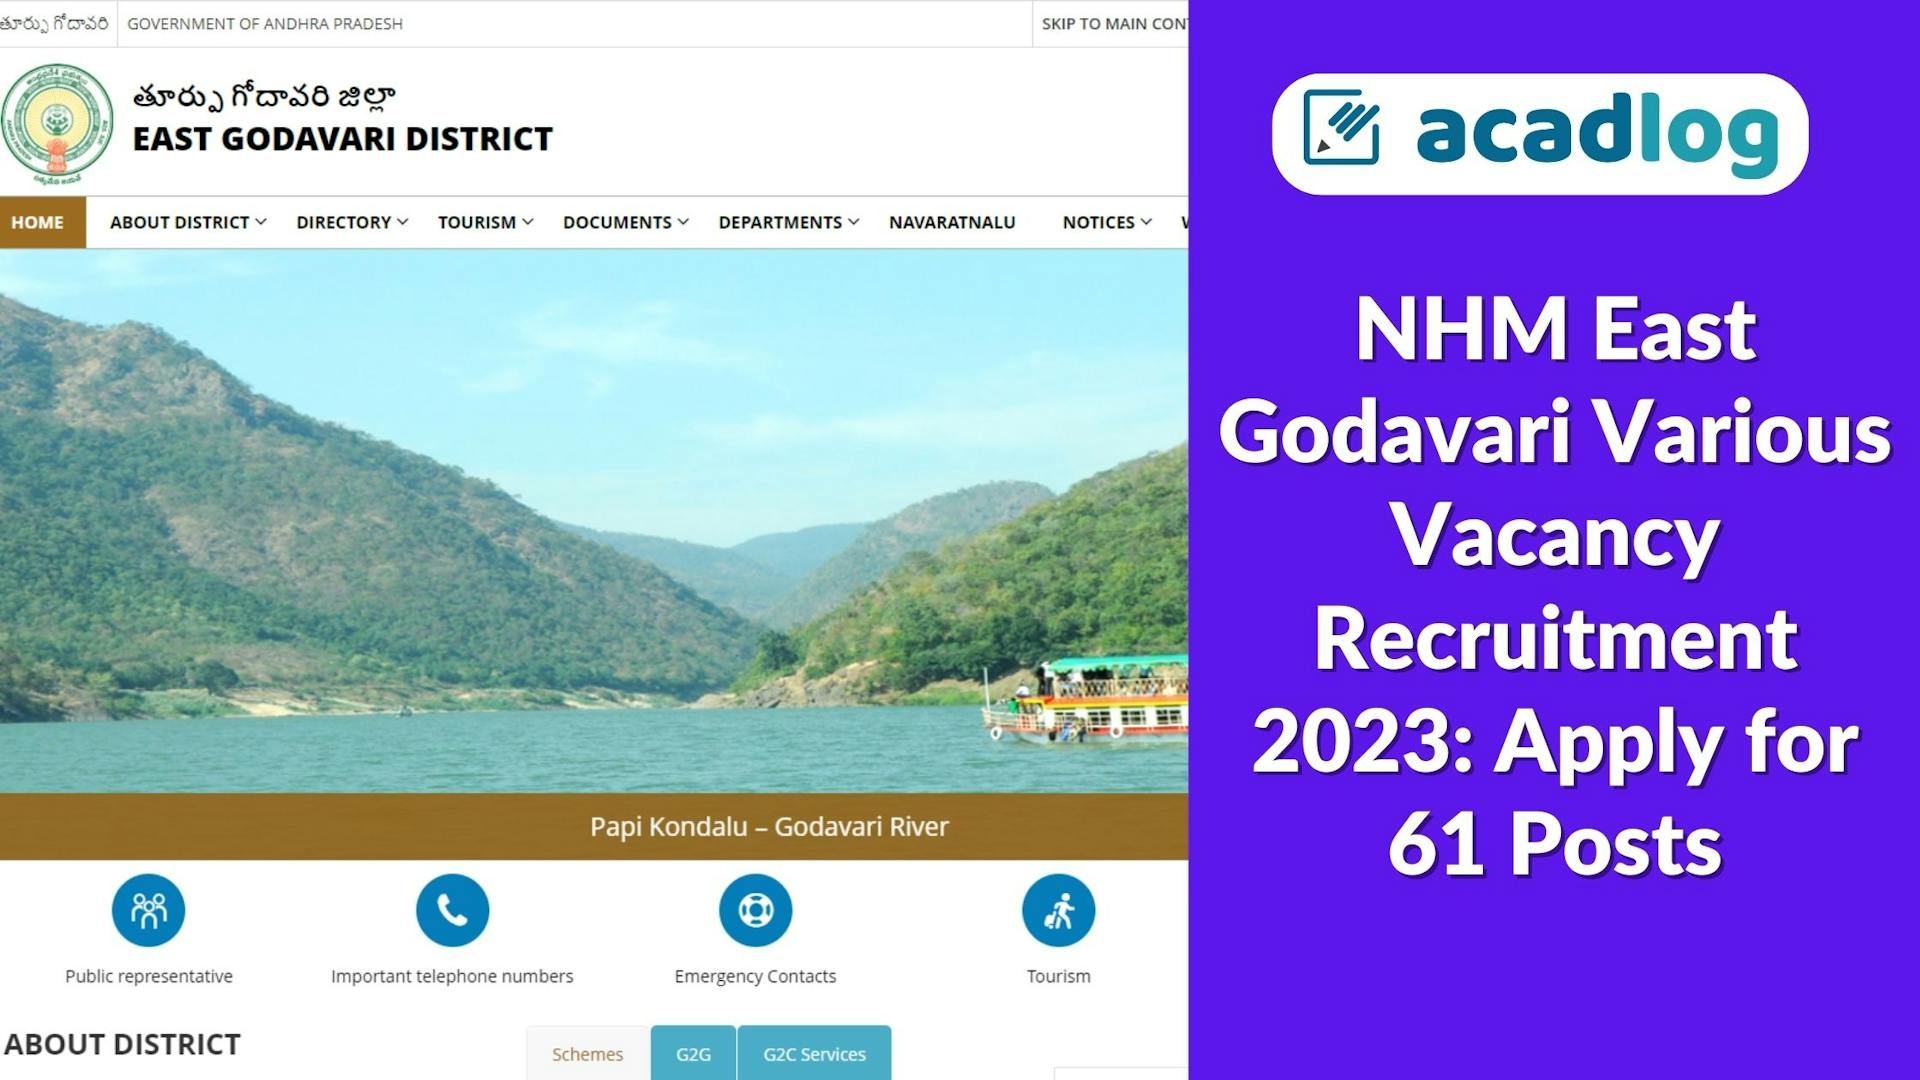 NHM East Godavari Various Vacancy Recruitment 2023: Apply for 61 Posts